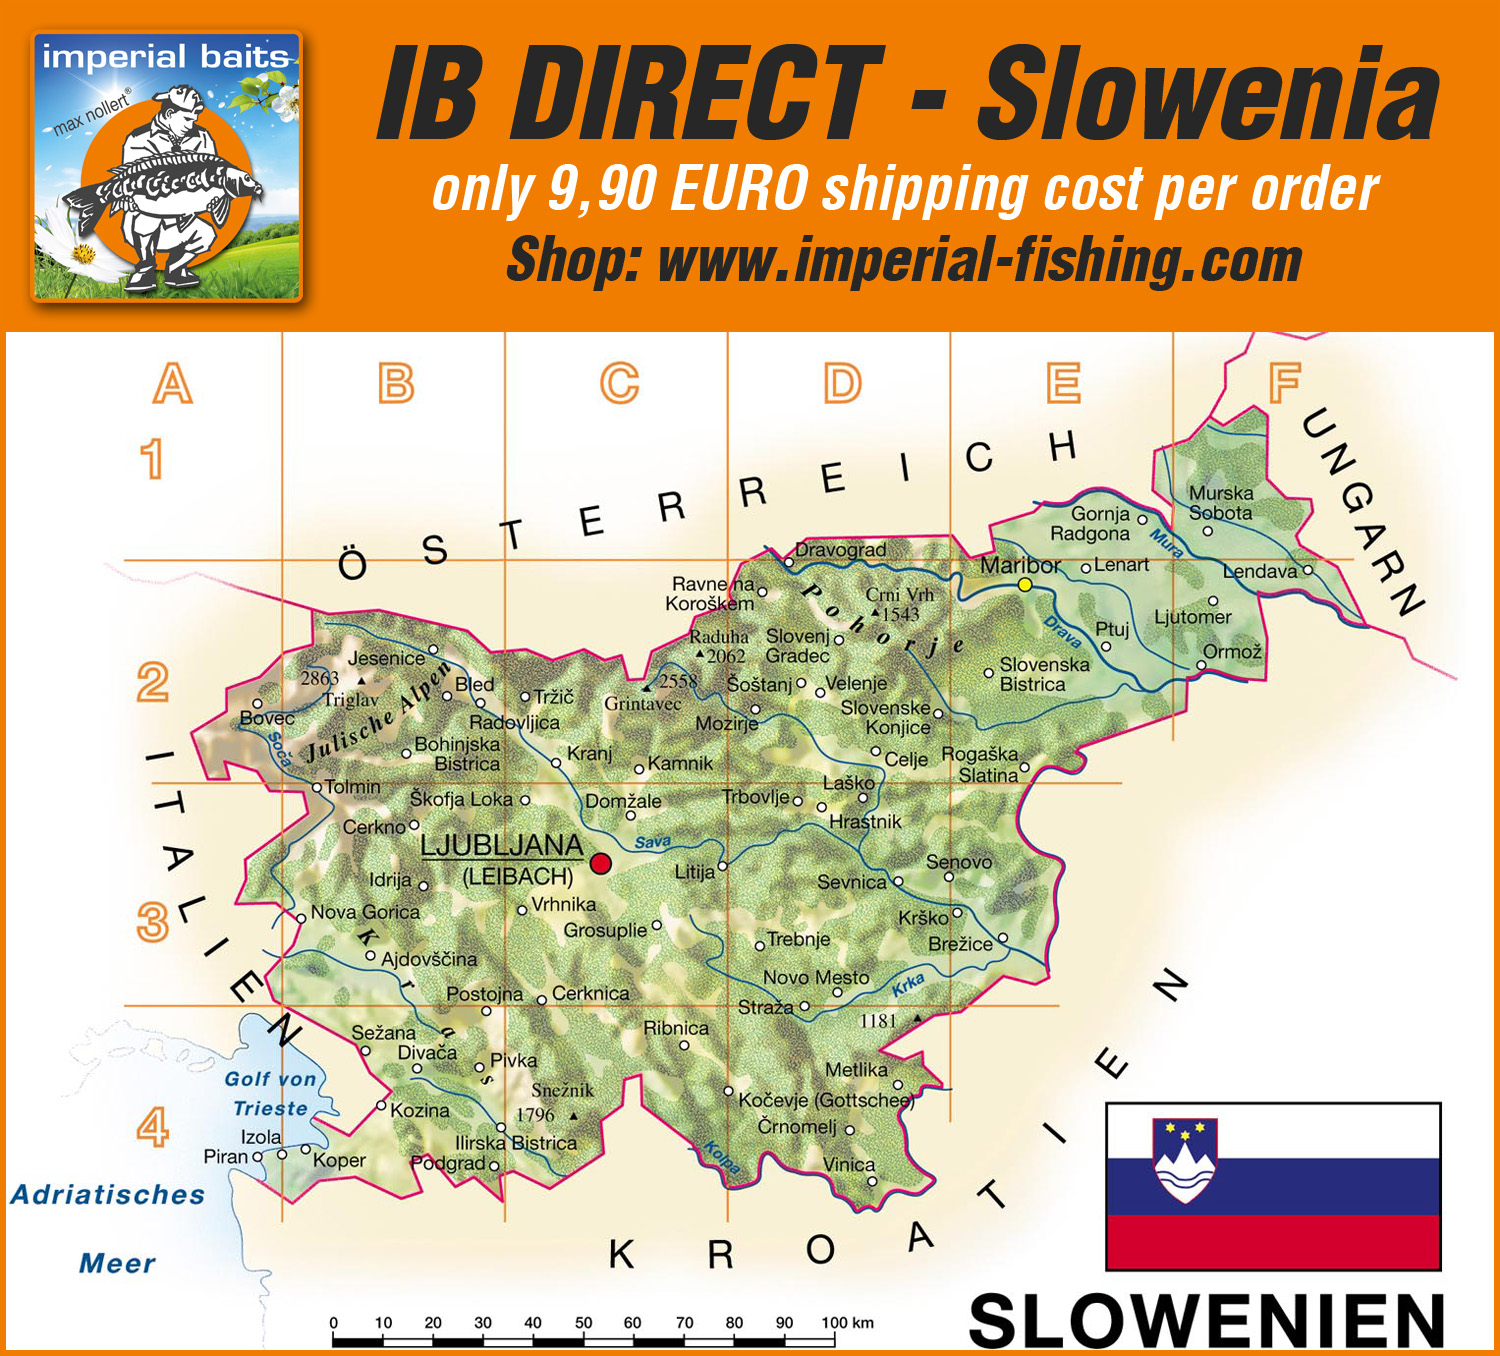 IB DIRECT – Slowenia